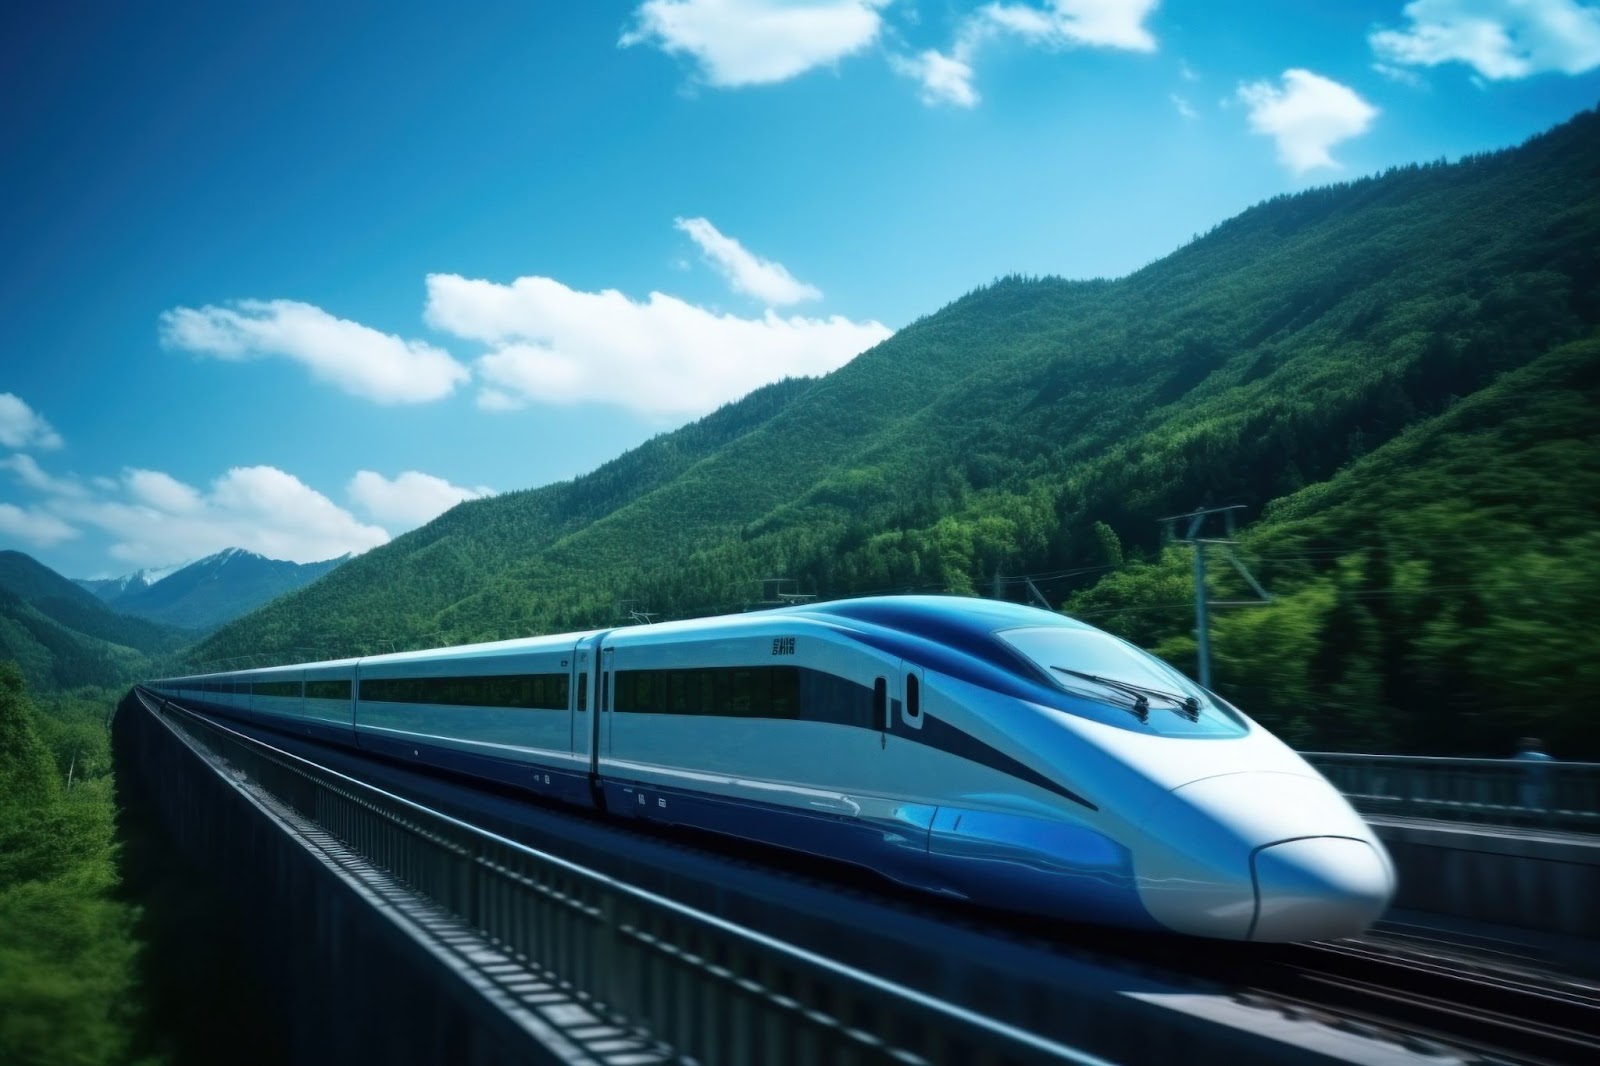 Eurostar Competitors May Enhance Travel Options